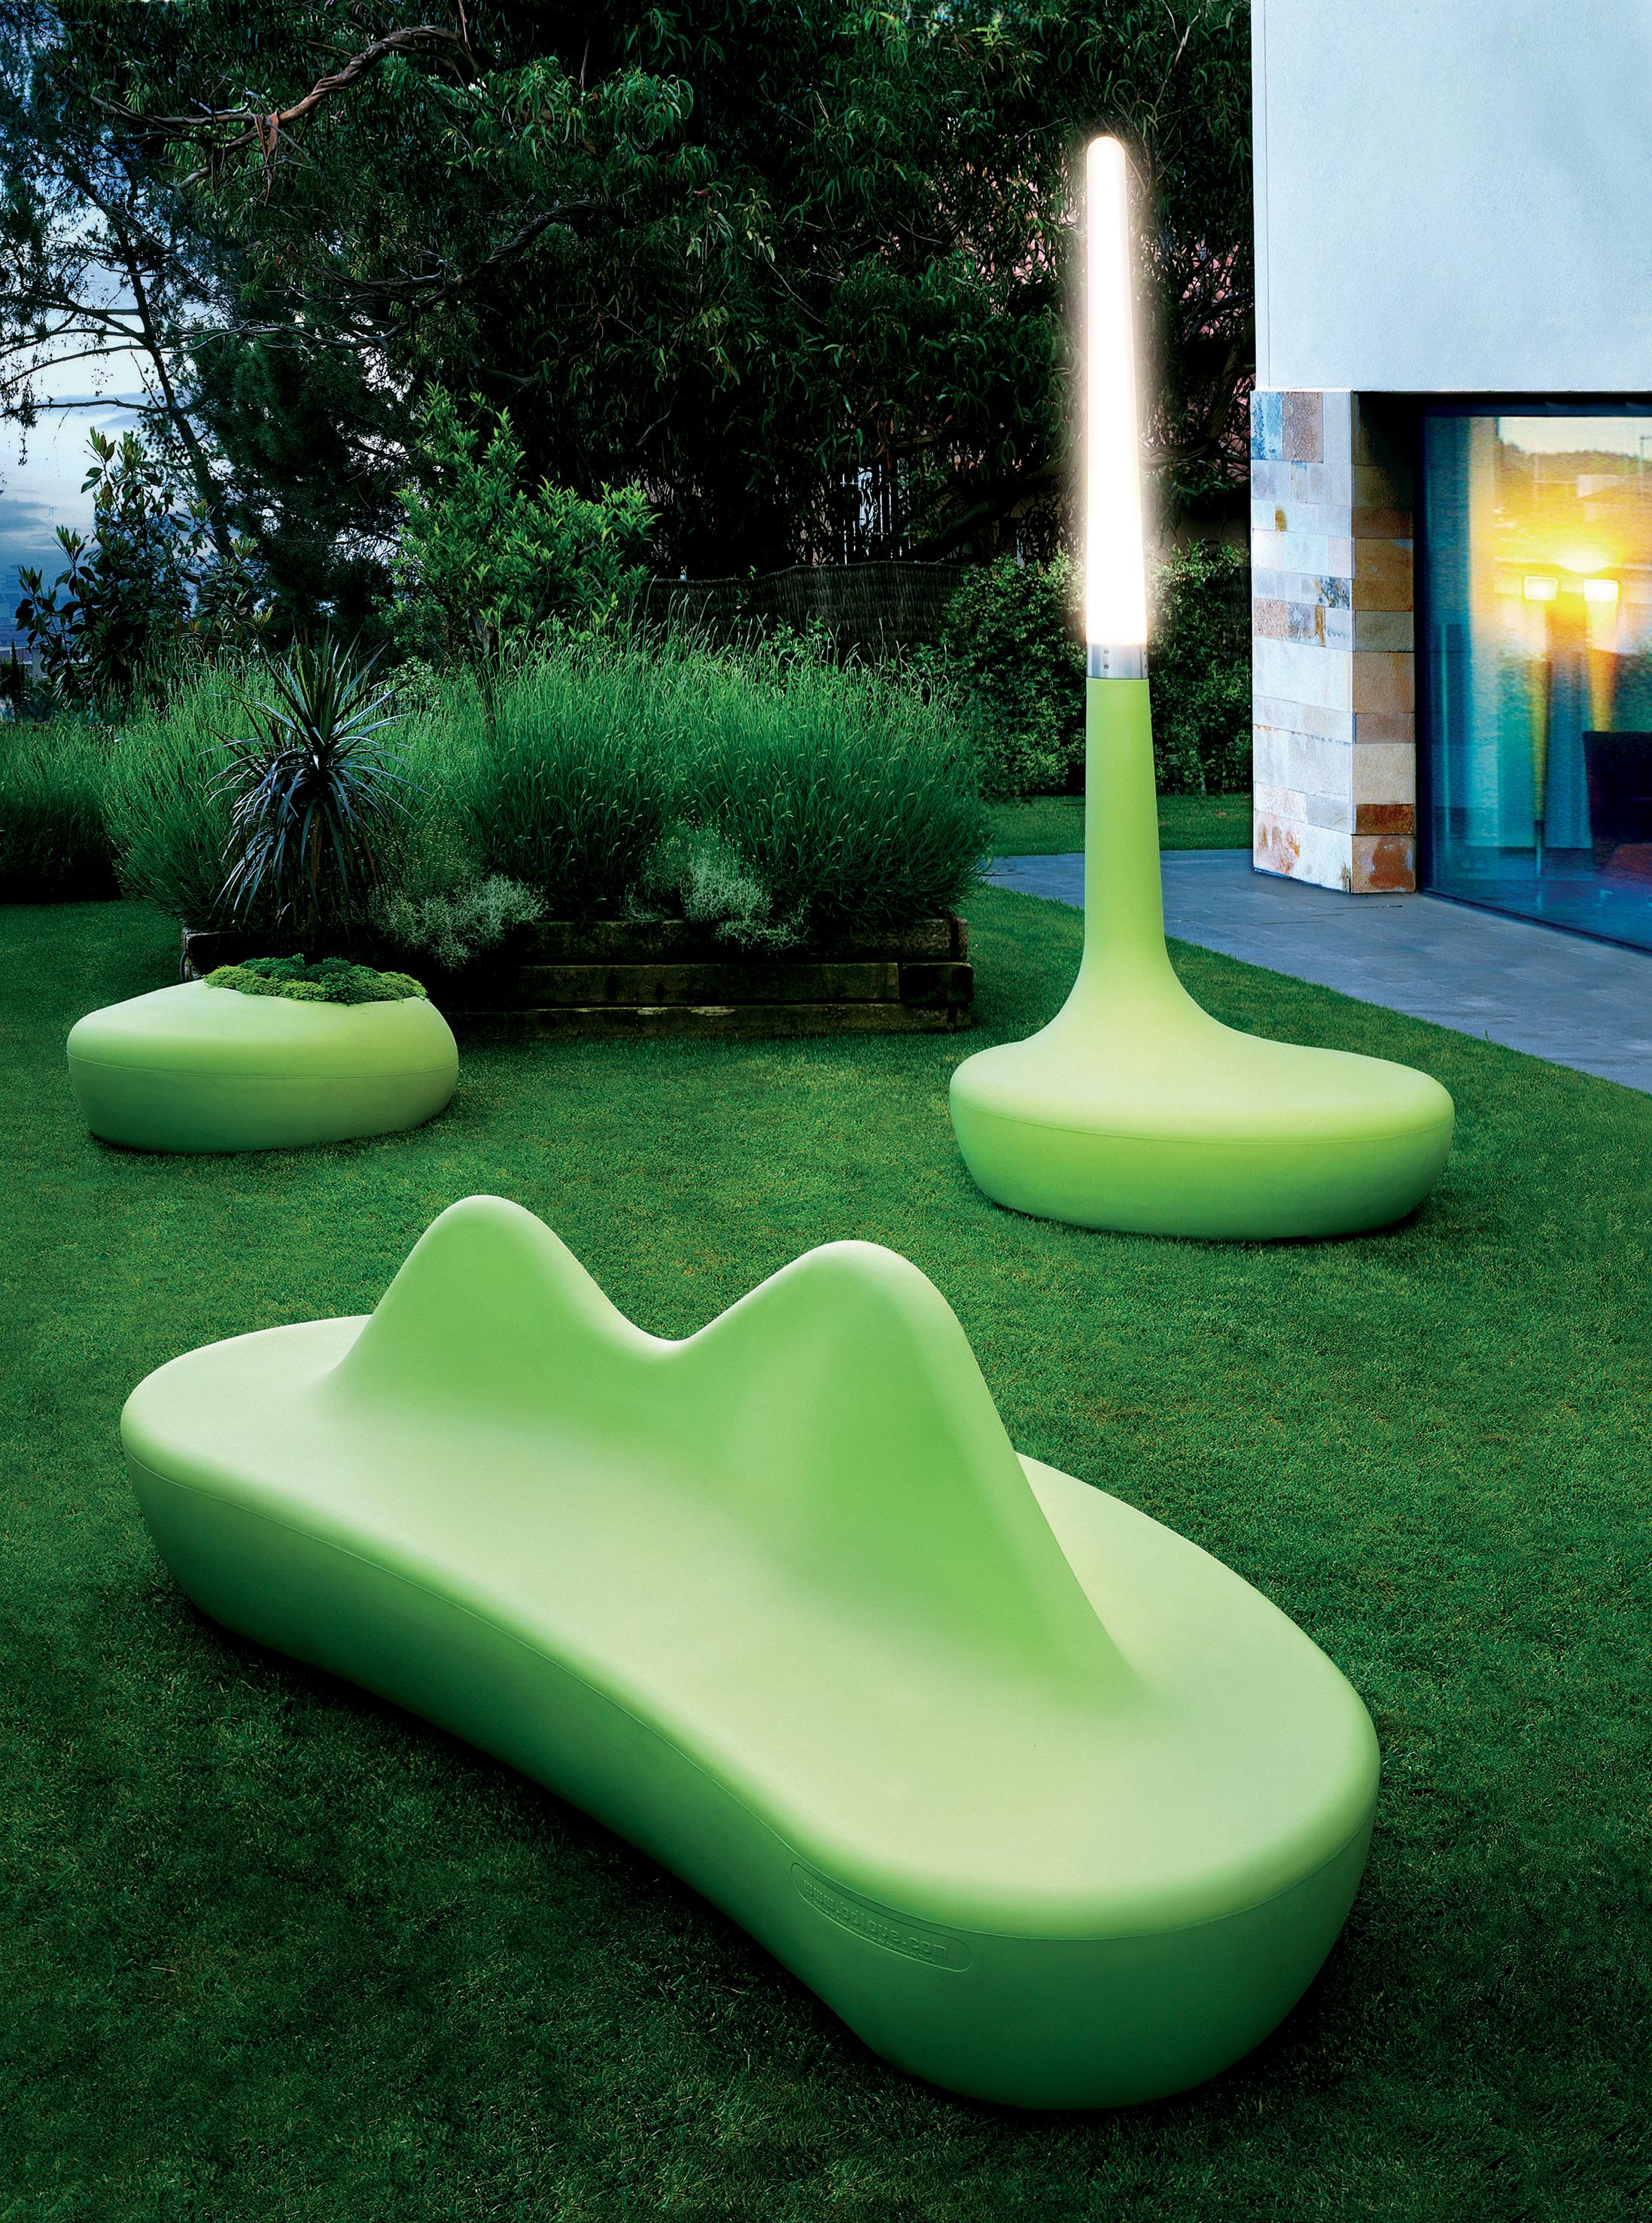 Spanish BDLove Public bench in green plastic designed by Ross Lovegrove model bdlove 